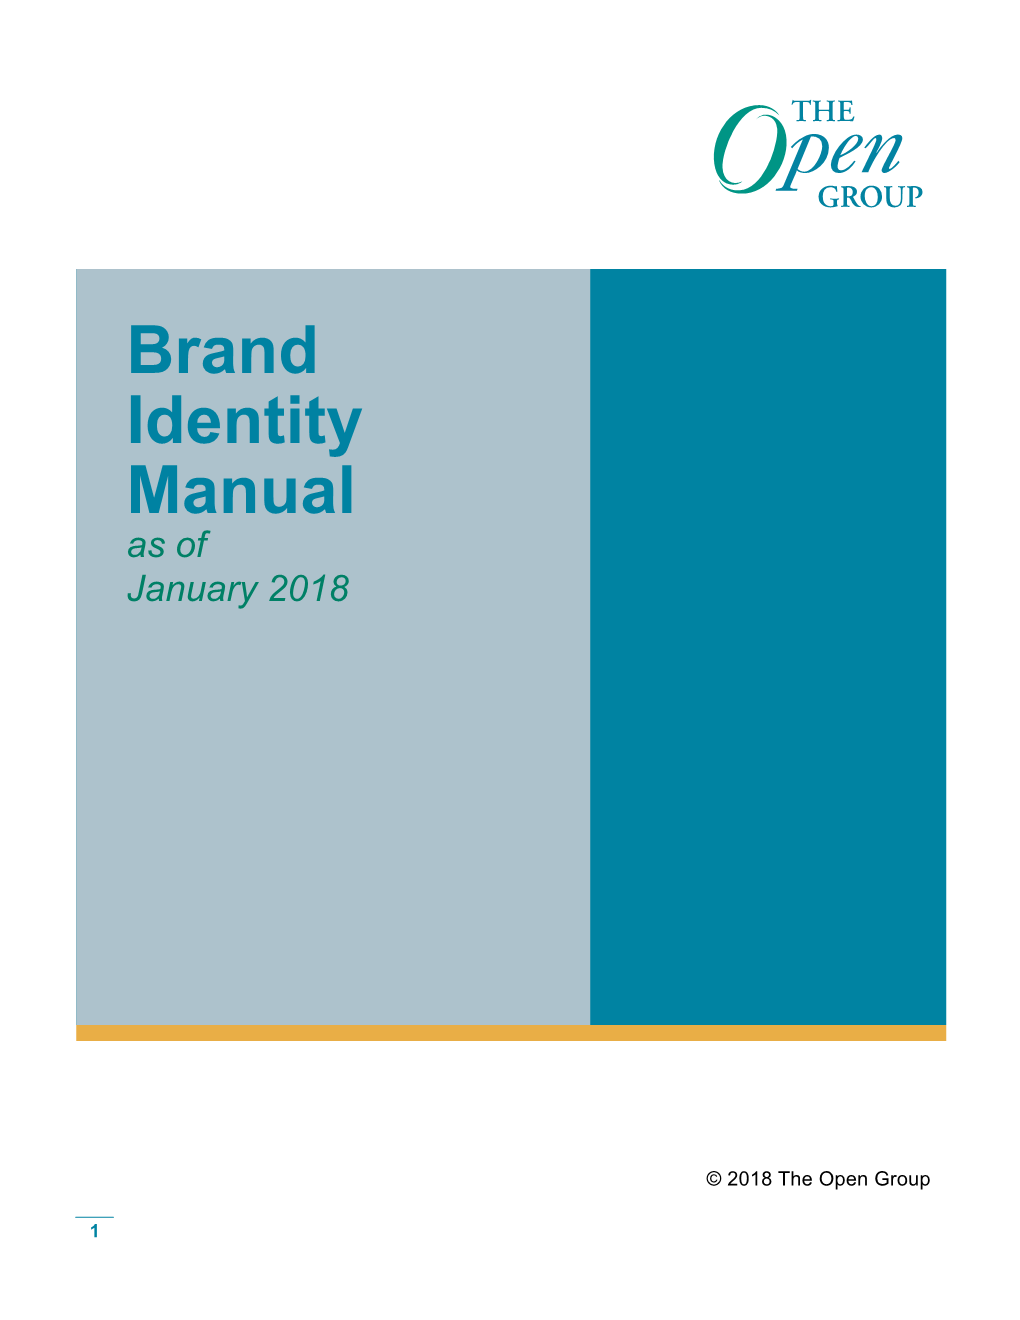 Brand Identity Manual As of January 2018